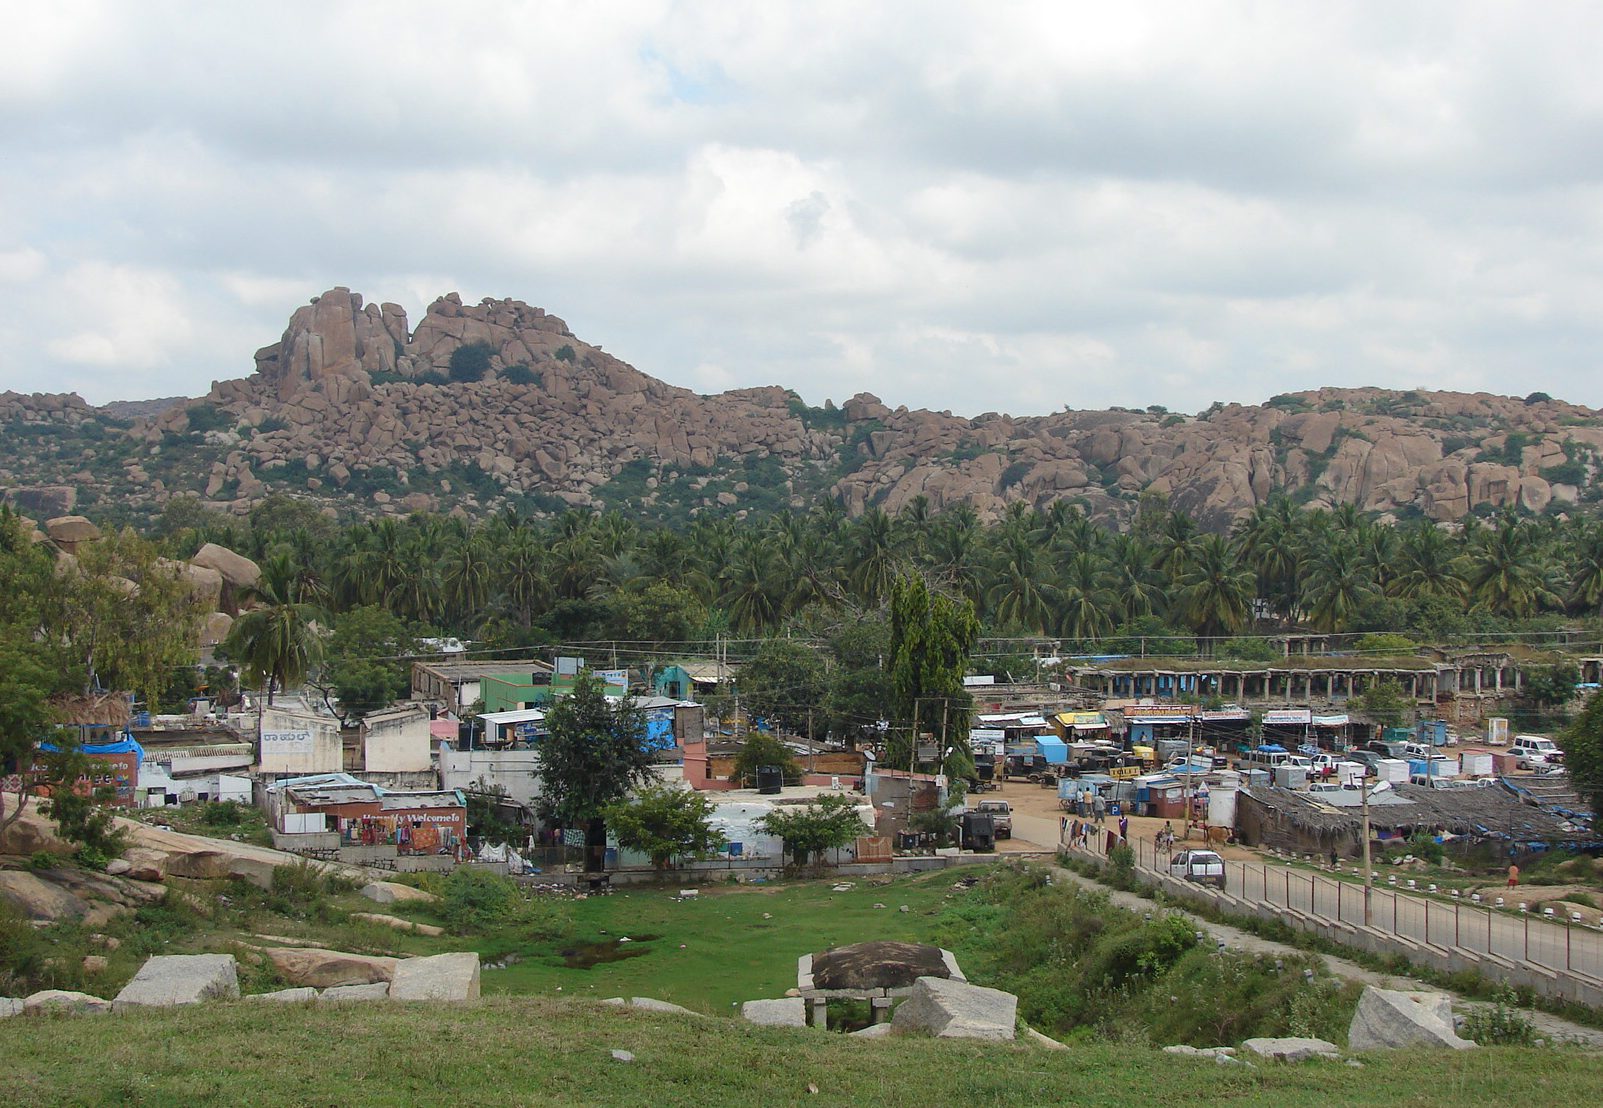 View of the Hampi bazaar from the top of the Hemakuta hills